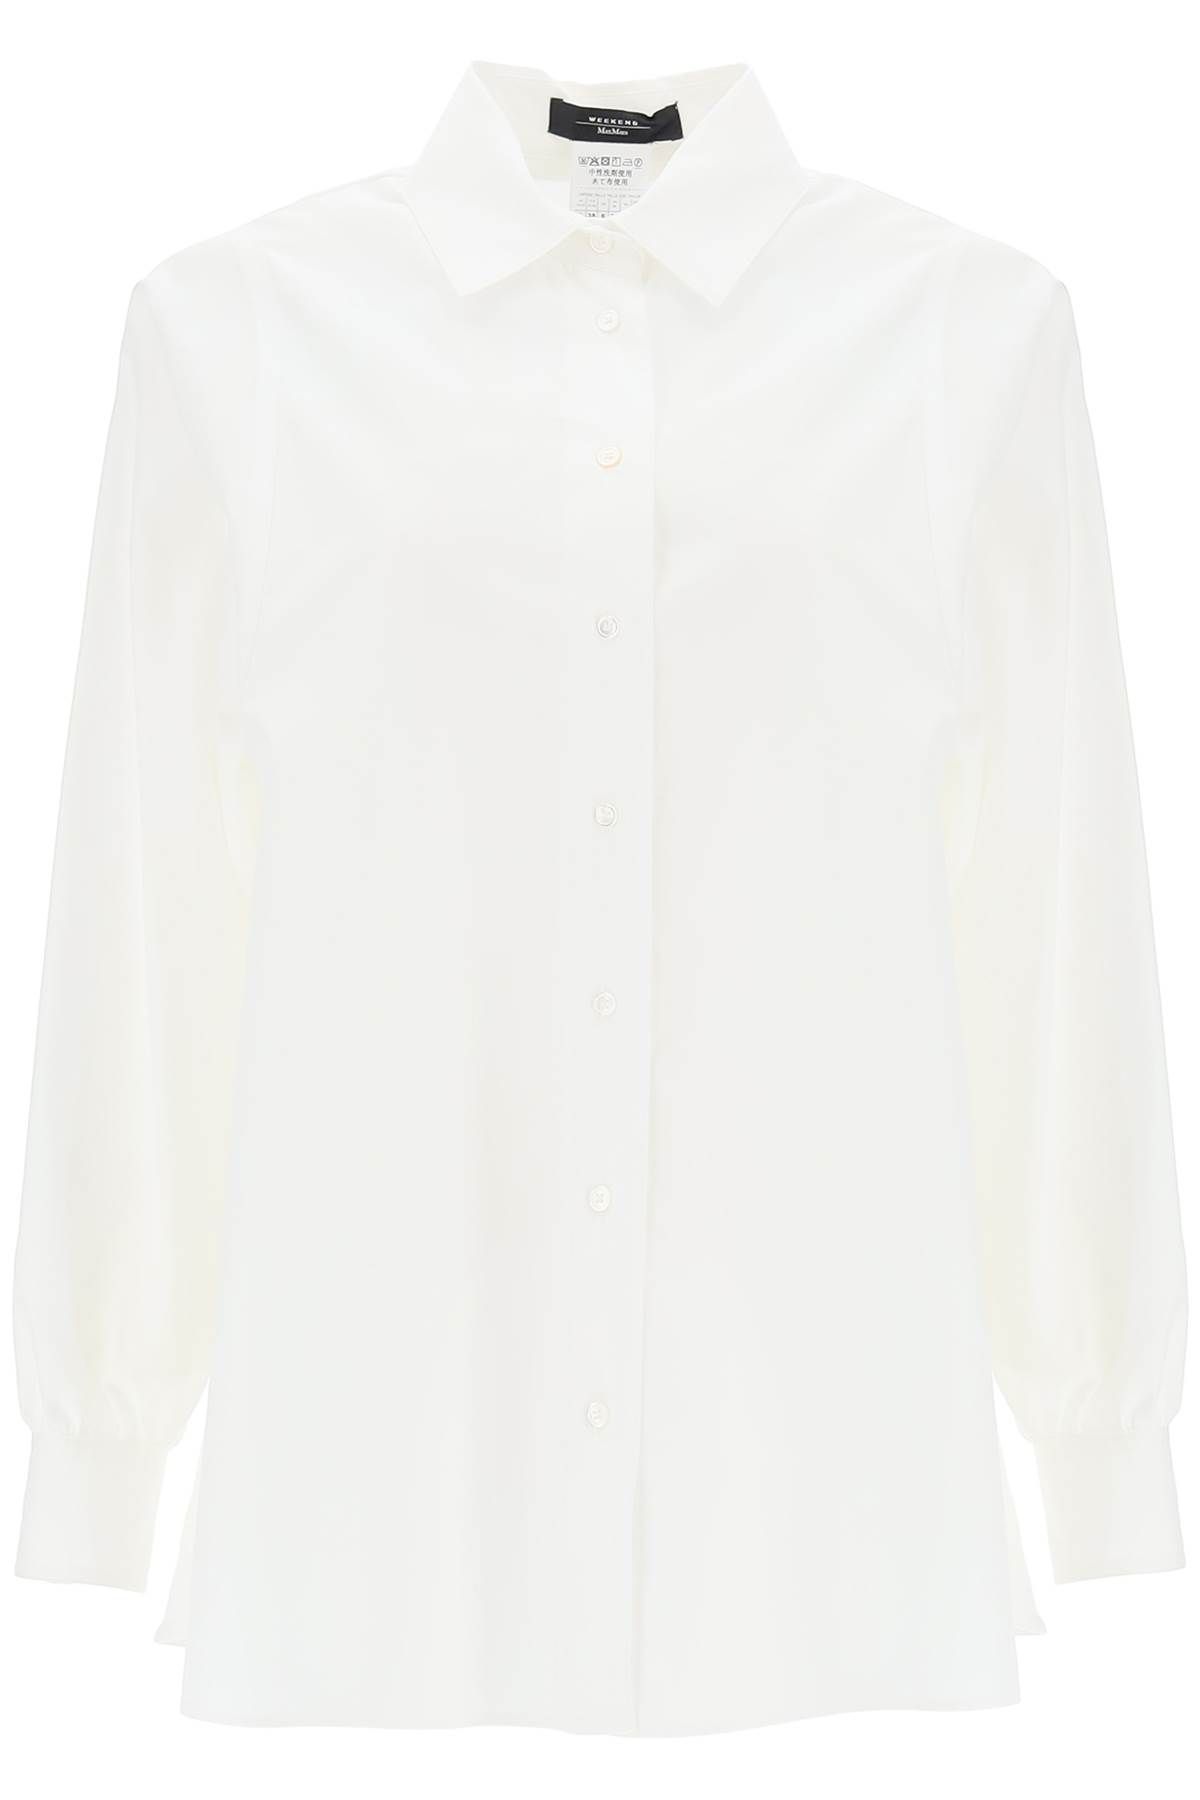 Weekend Max Mara Cotton Poplin Shirt In White